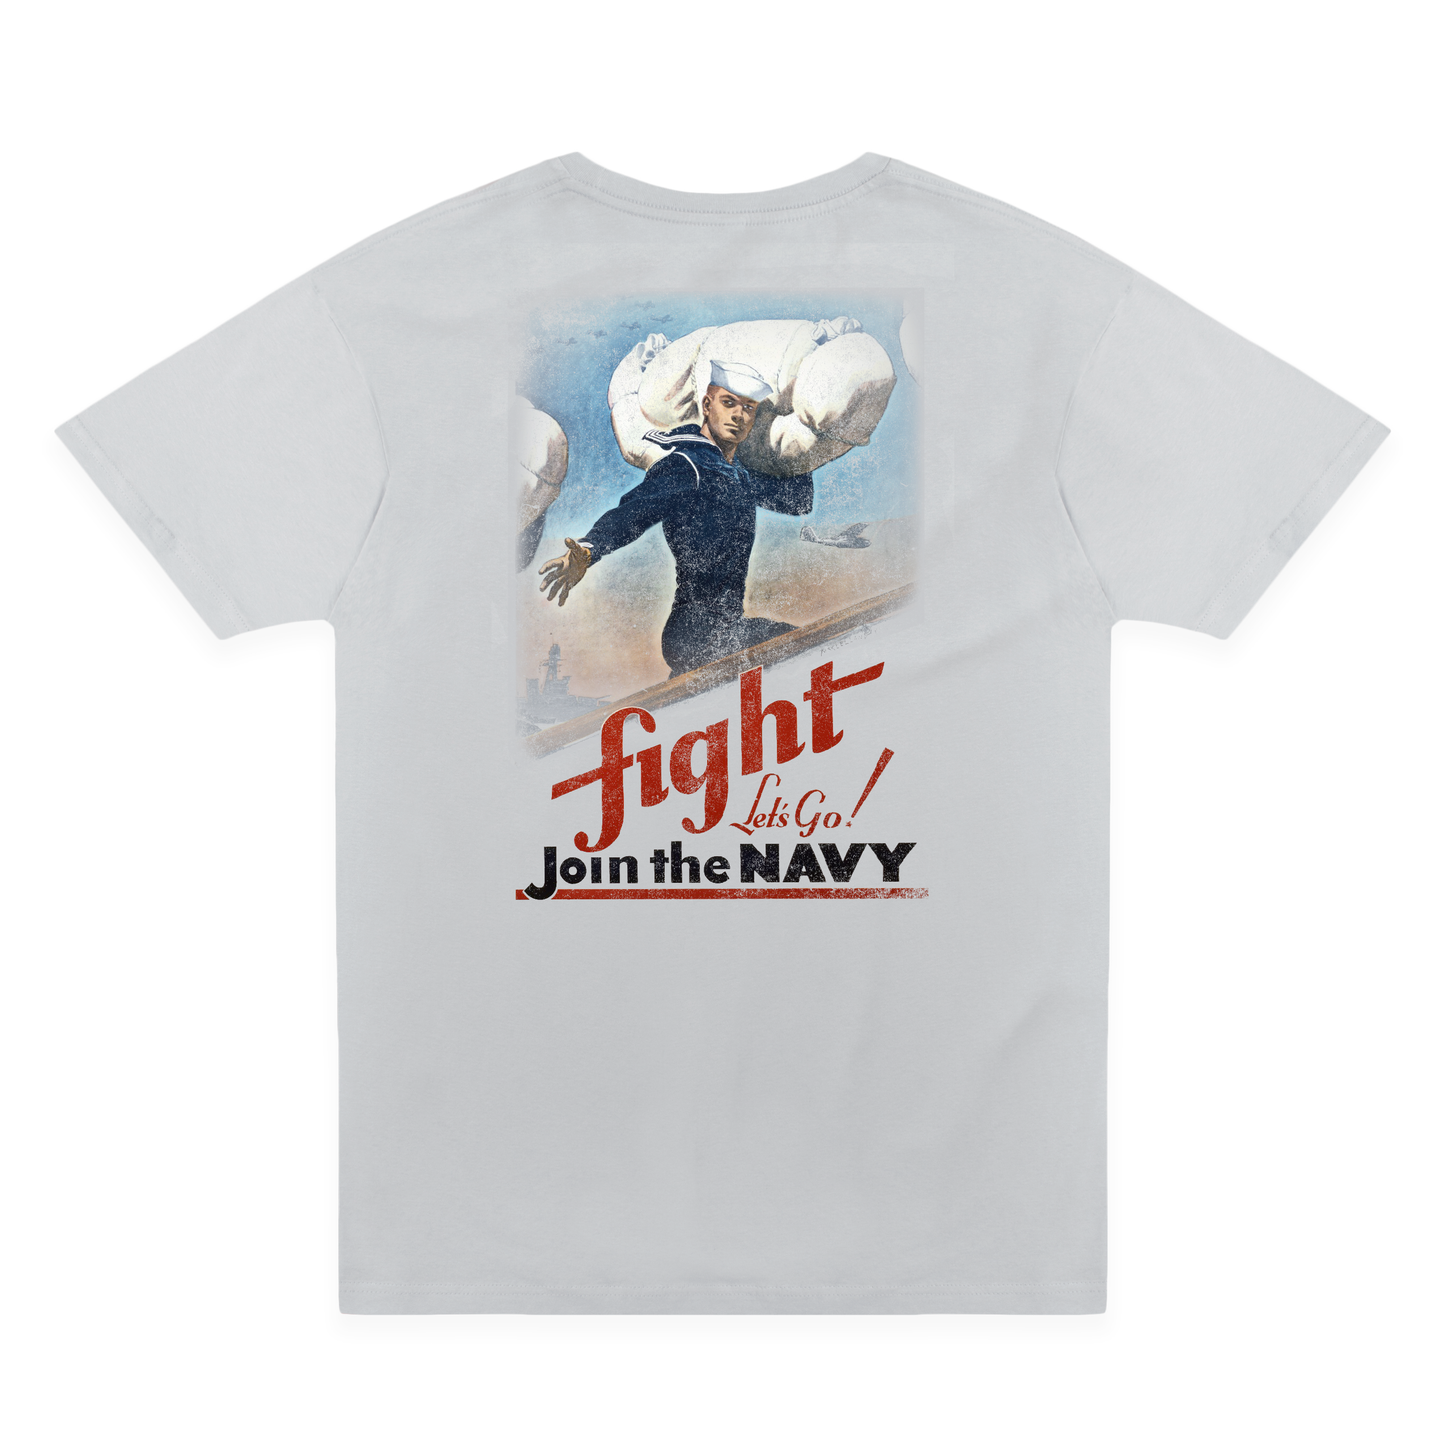 America's Navy Fight Let's Go! Vintage U.S. Navy Poster Tee